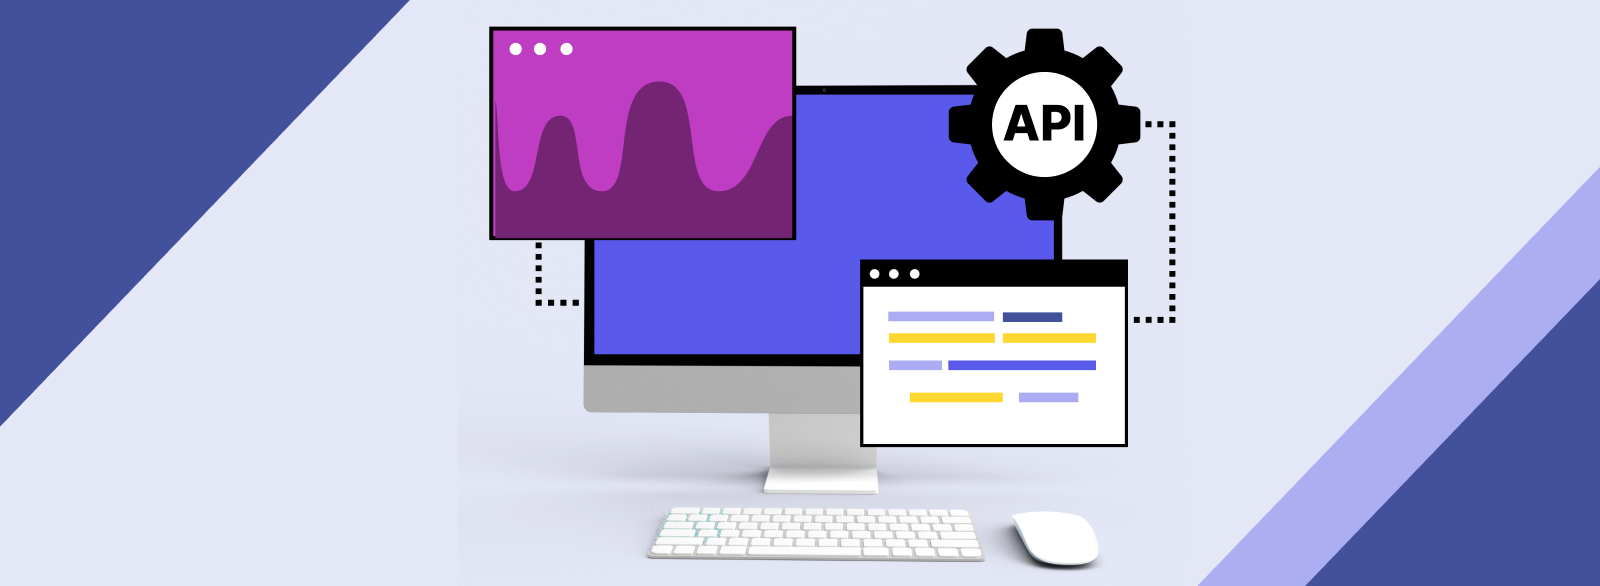 API Examples